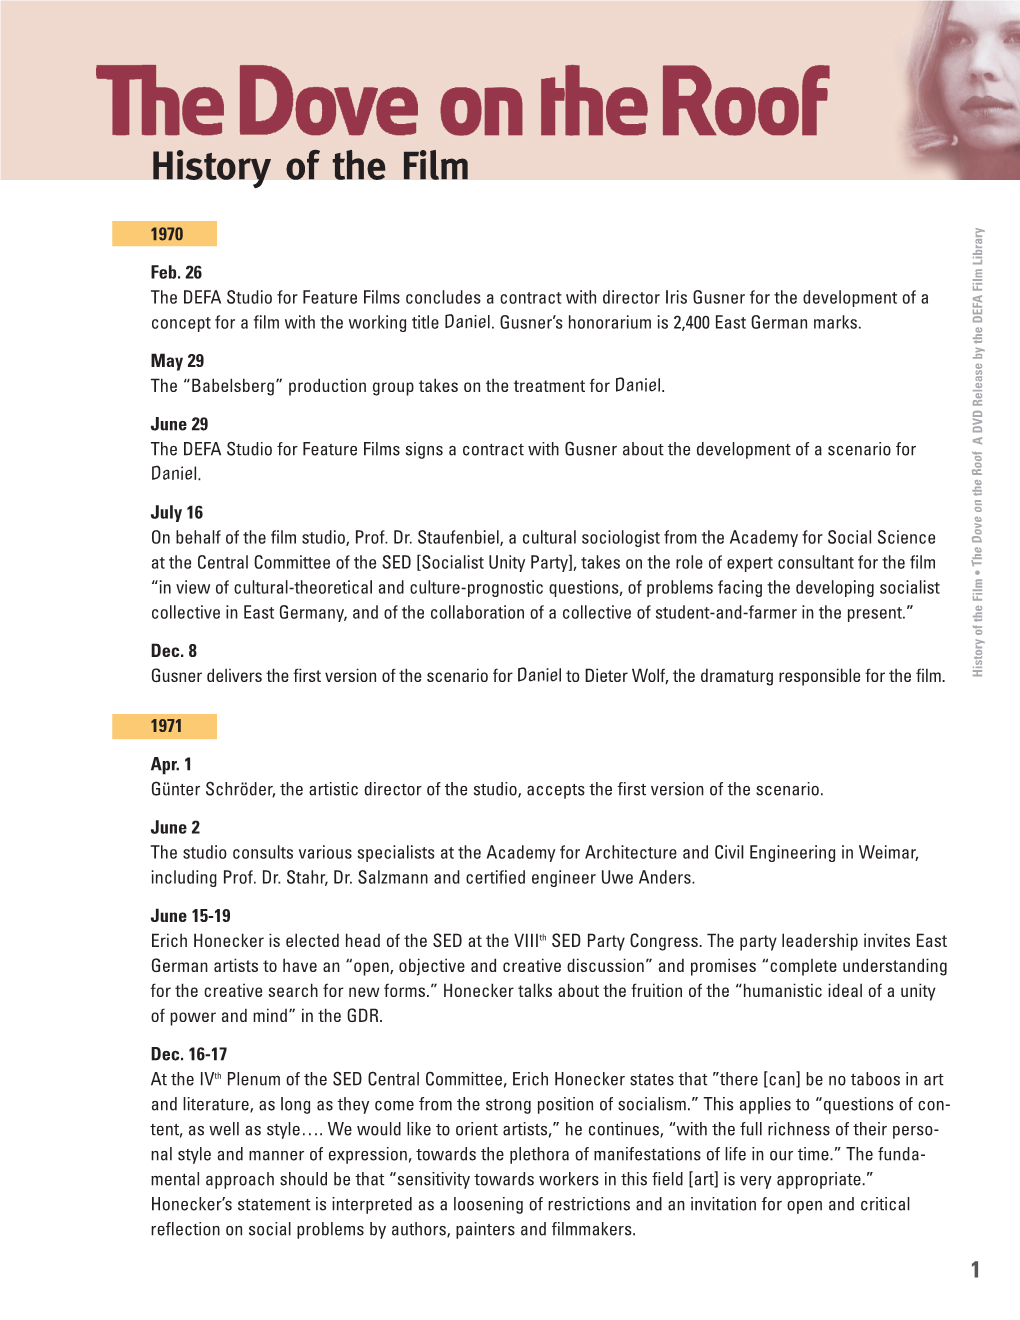 History of the Film by Thomas Elsaesser Y 1970 R a R B I L